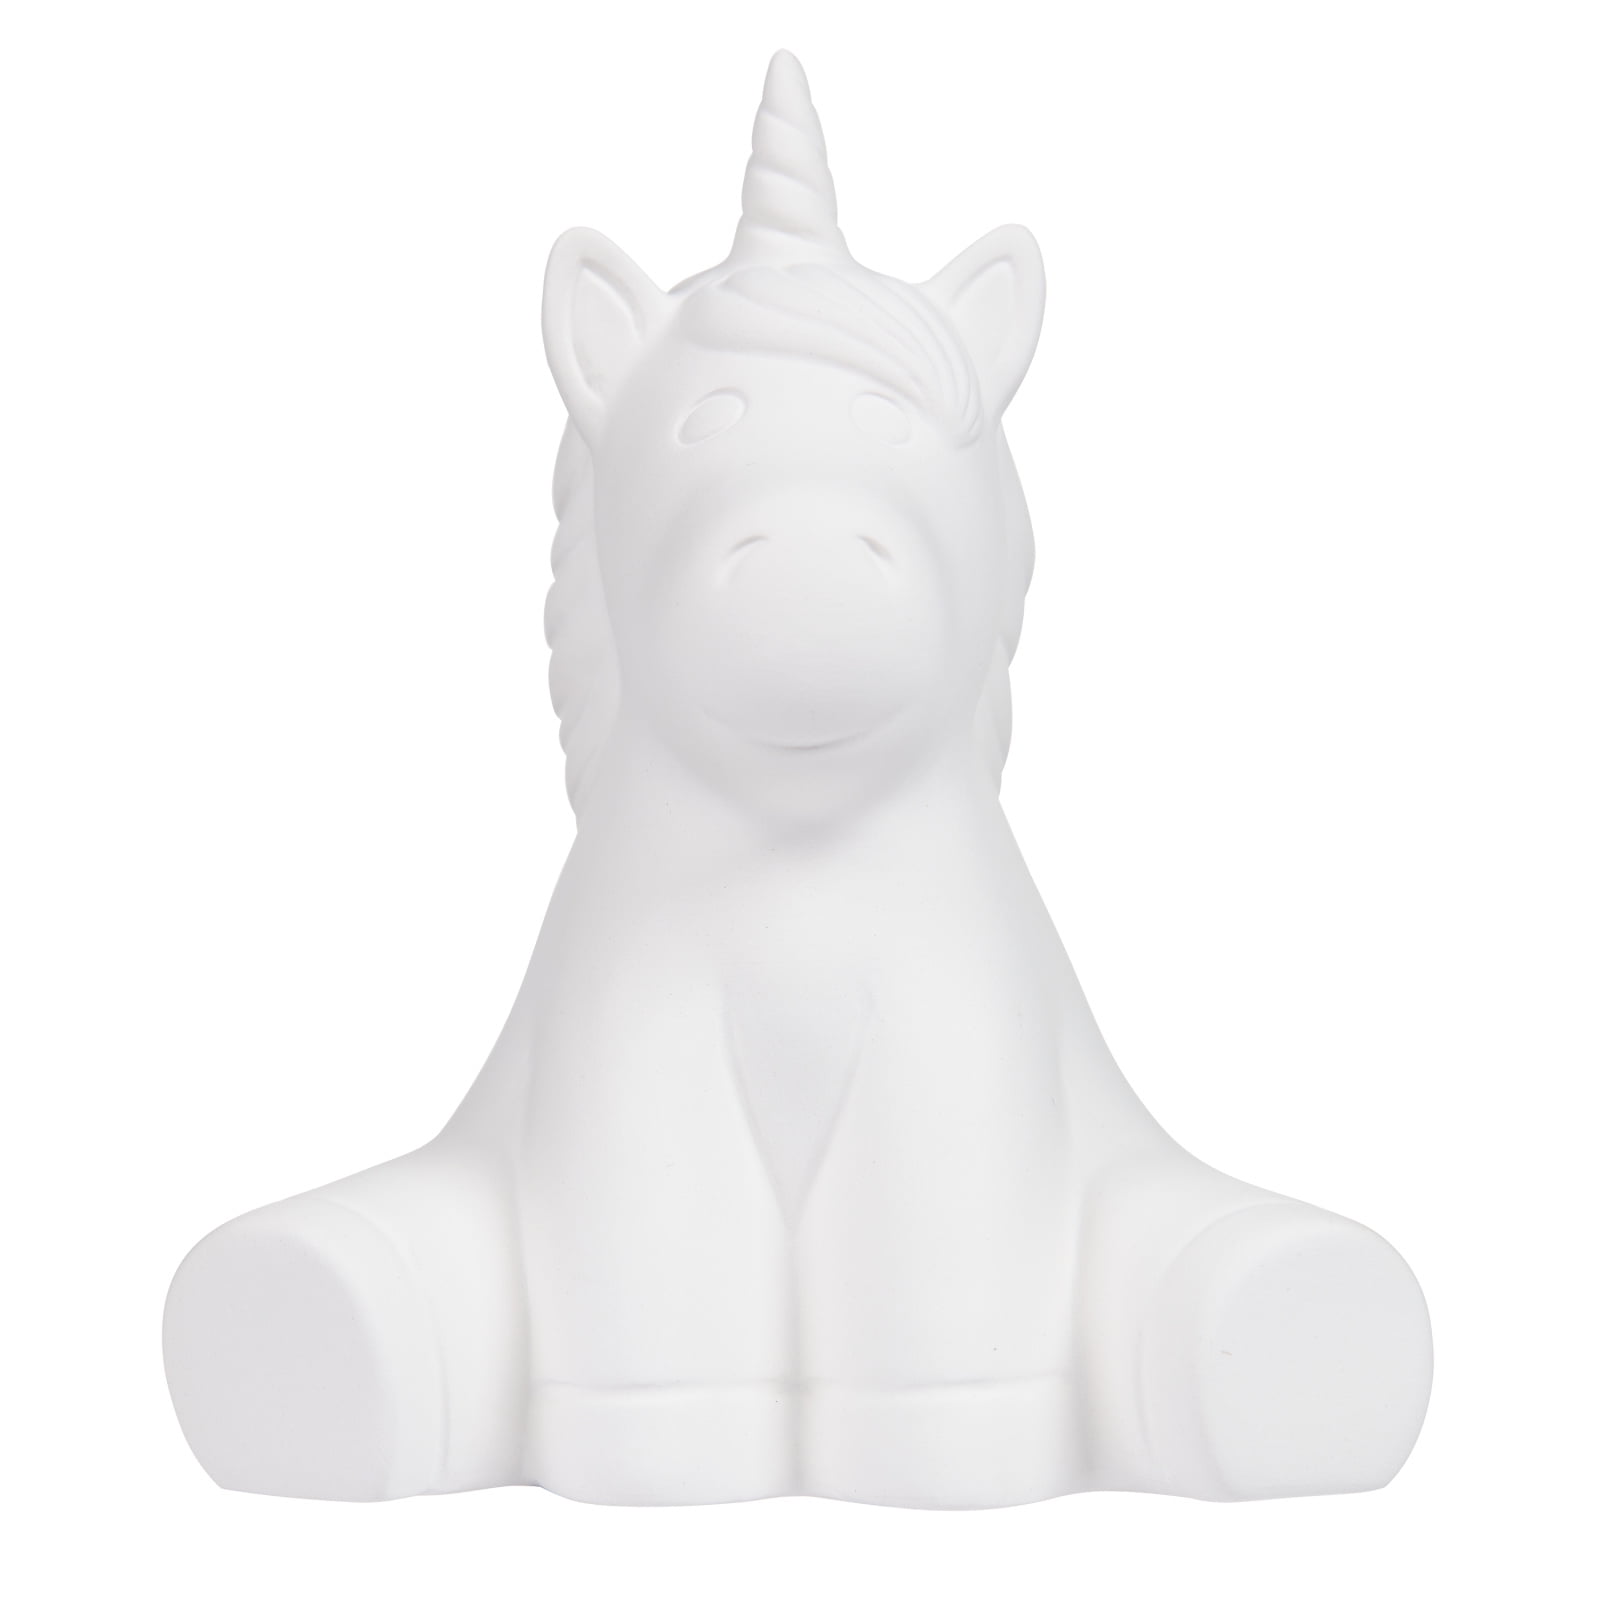 Hello Hobby Paintable Figurine Sitting Unicorn, 5.25" Height